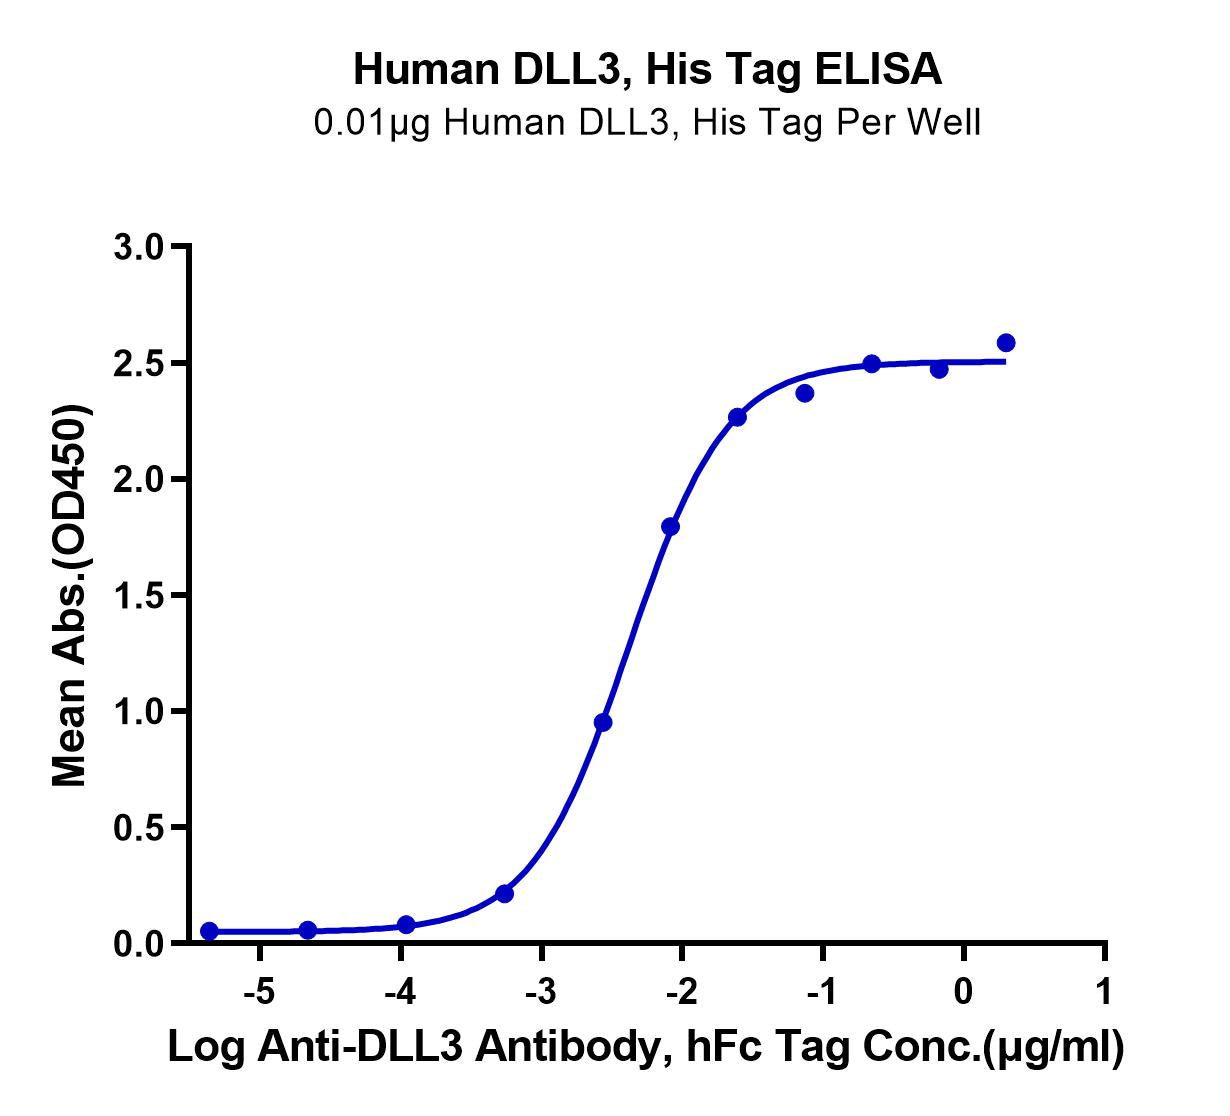 Human DLL3 Protein (DLL-HM103)